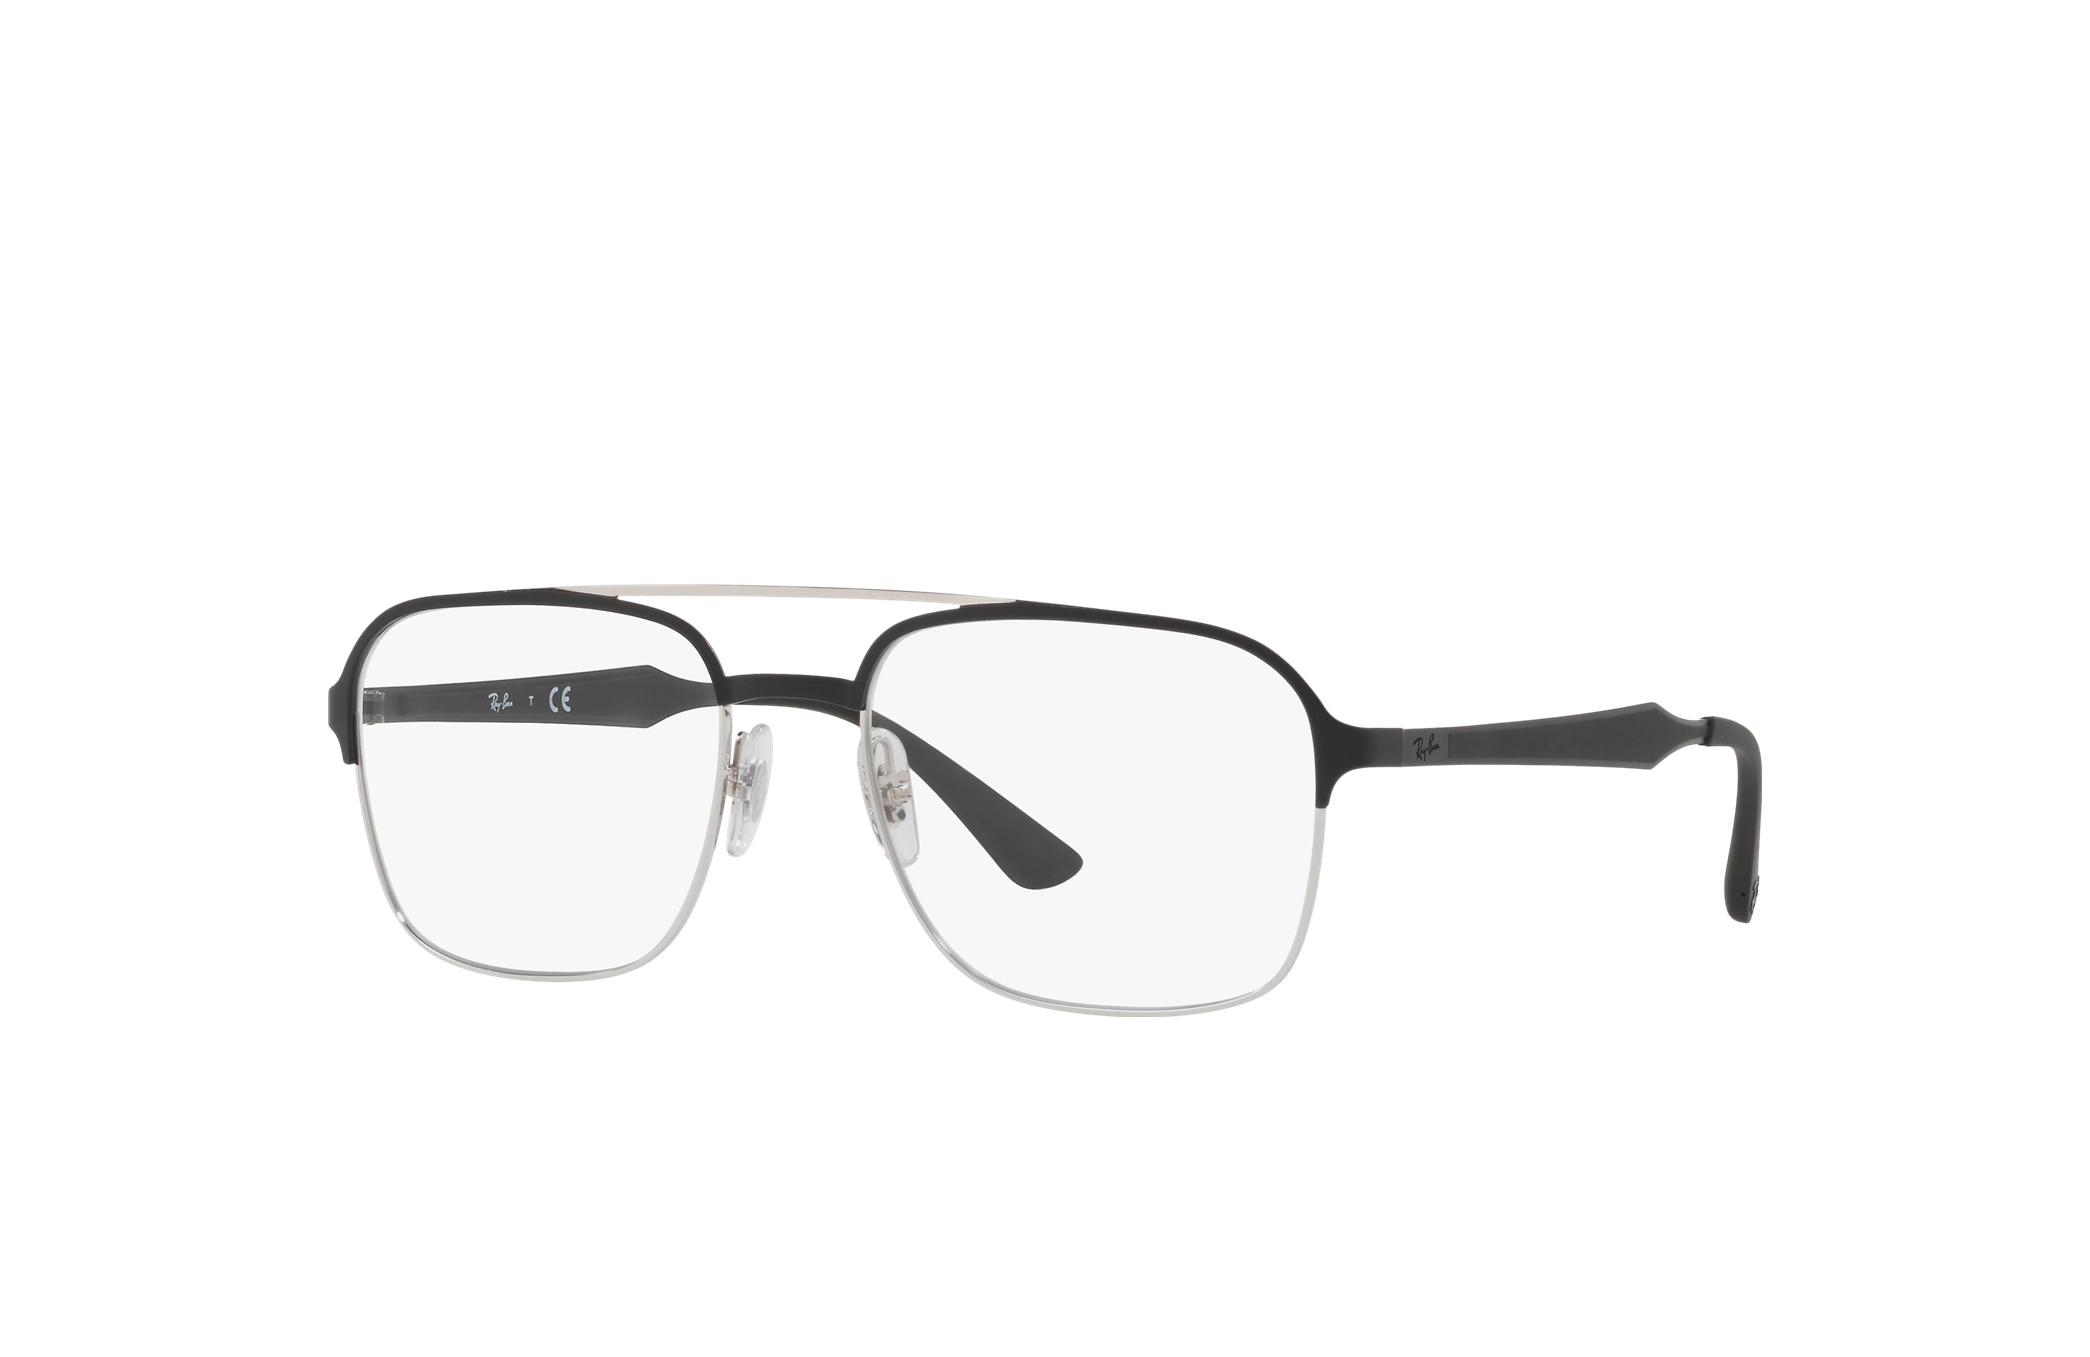 Rb6404 Eyeglasses with Black Frame - RB6404 | Ray-Ban®